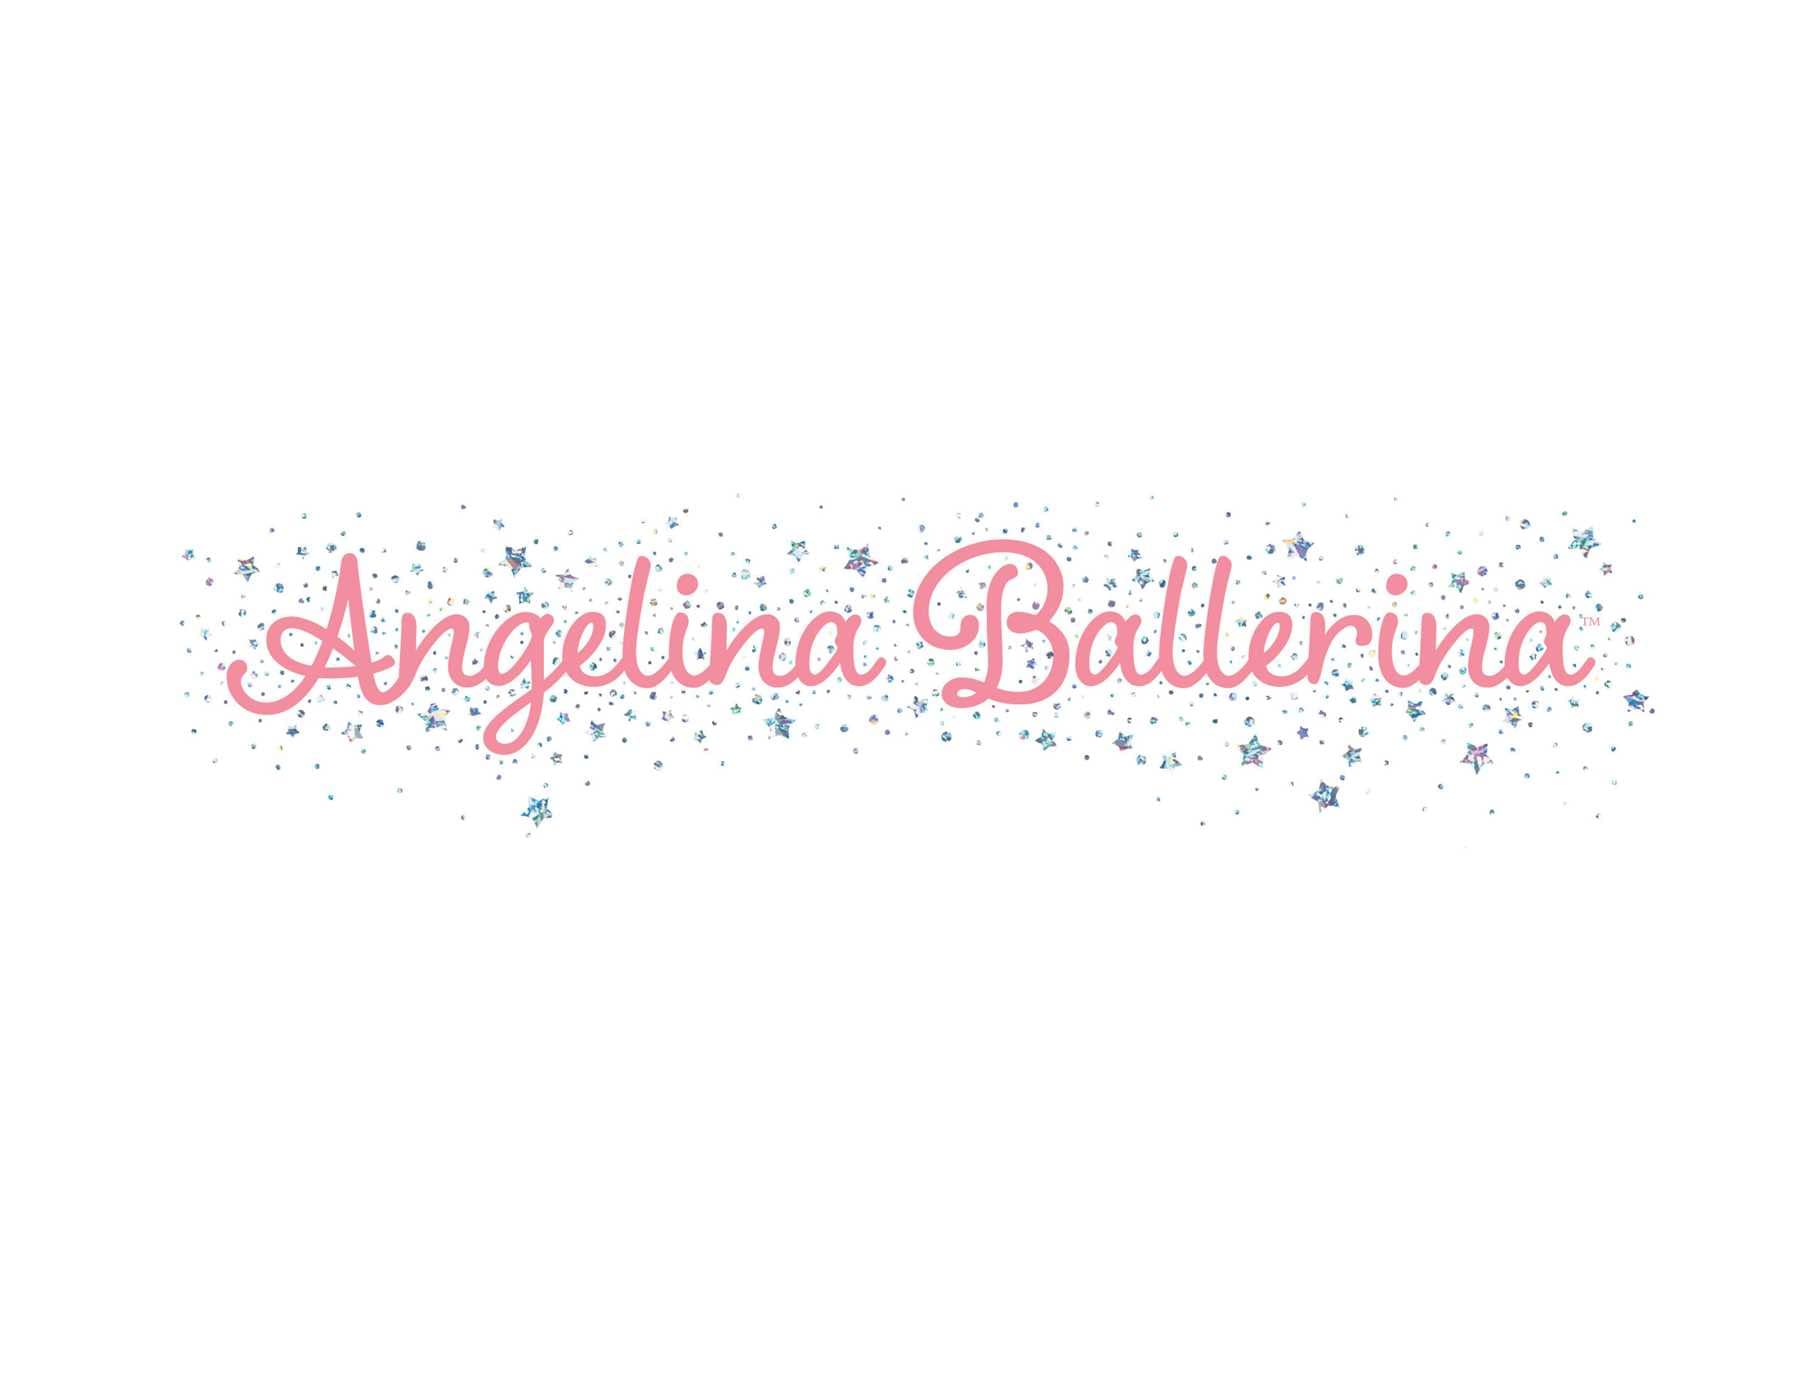 Angelina on Stage (Angelina Ballerina)